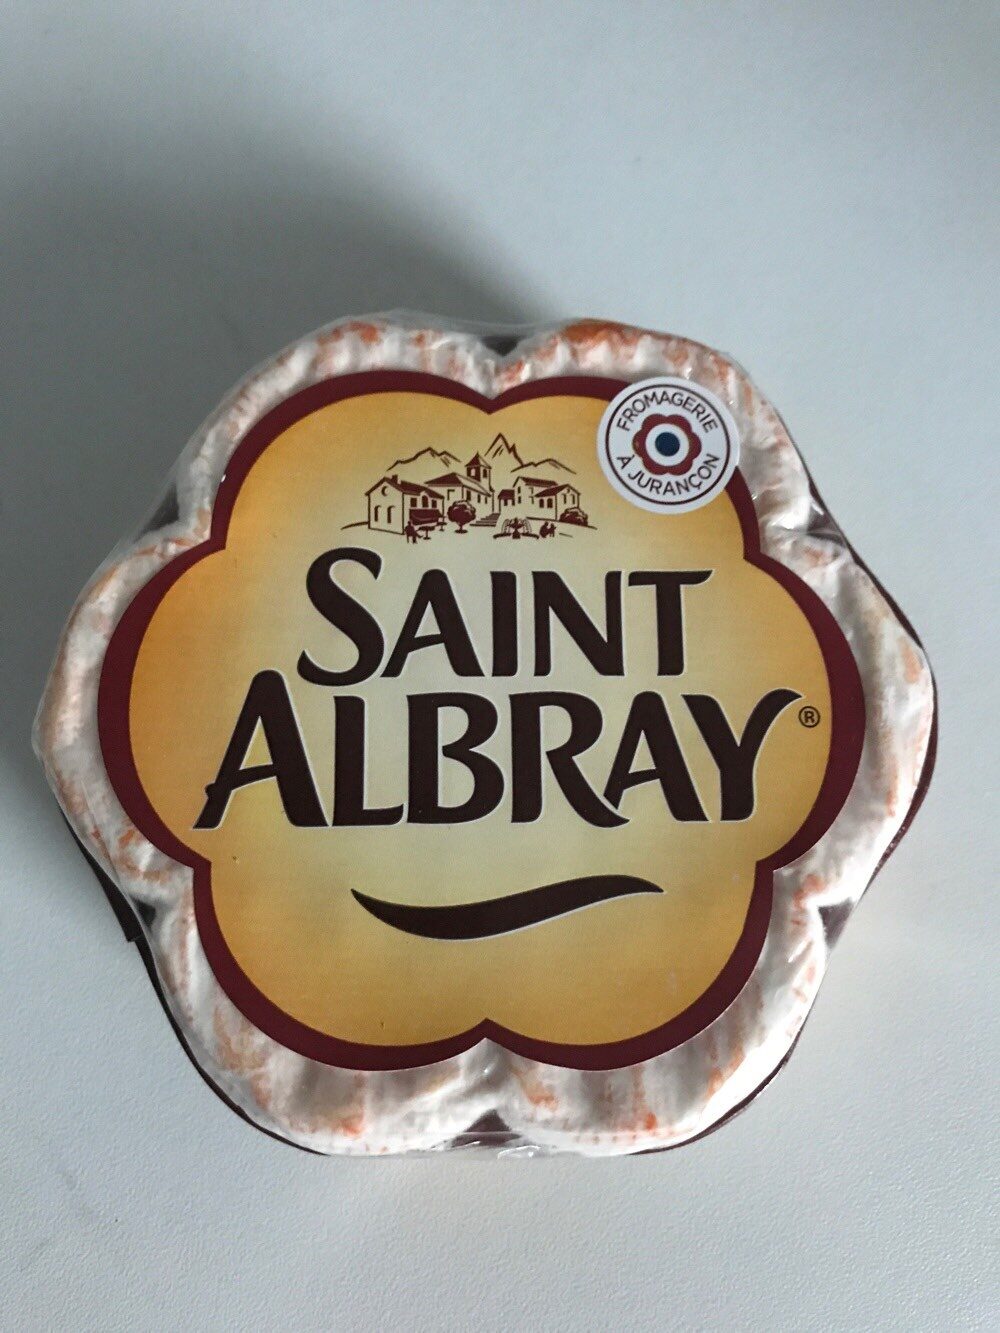 Saint Albray vollmundig & würzig - Product - de